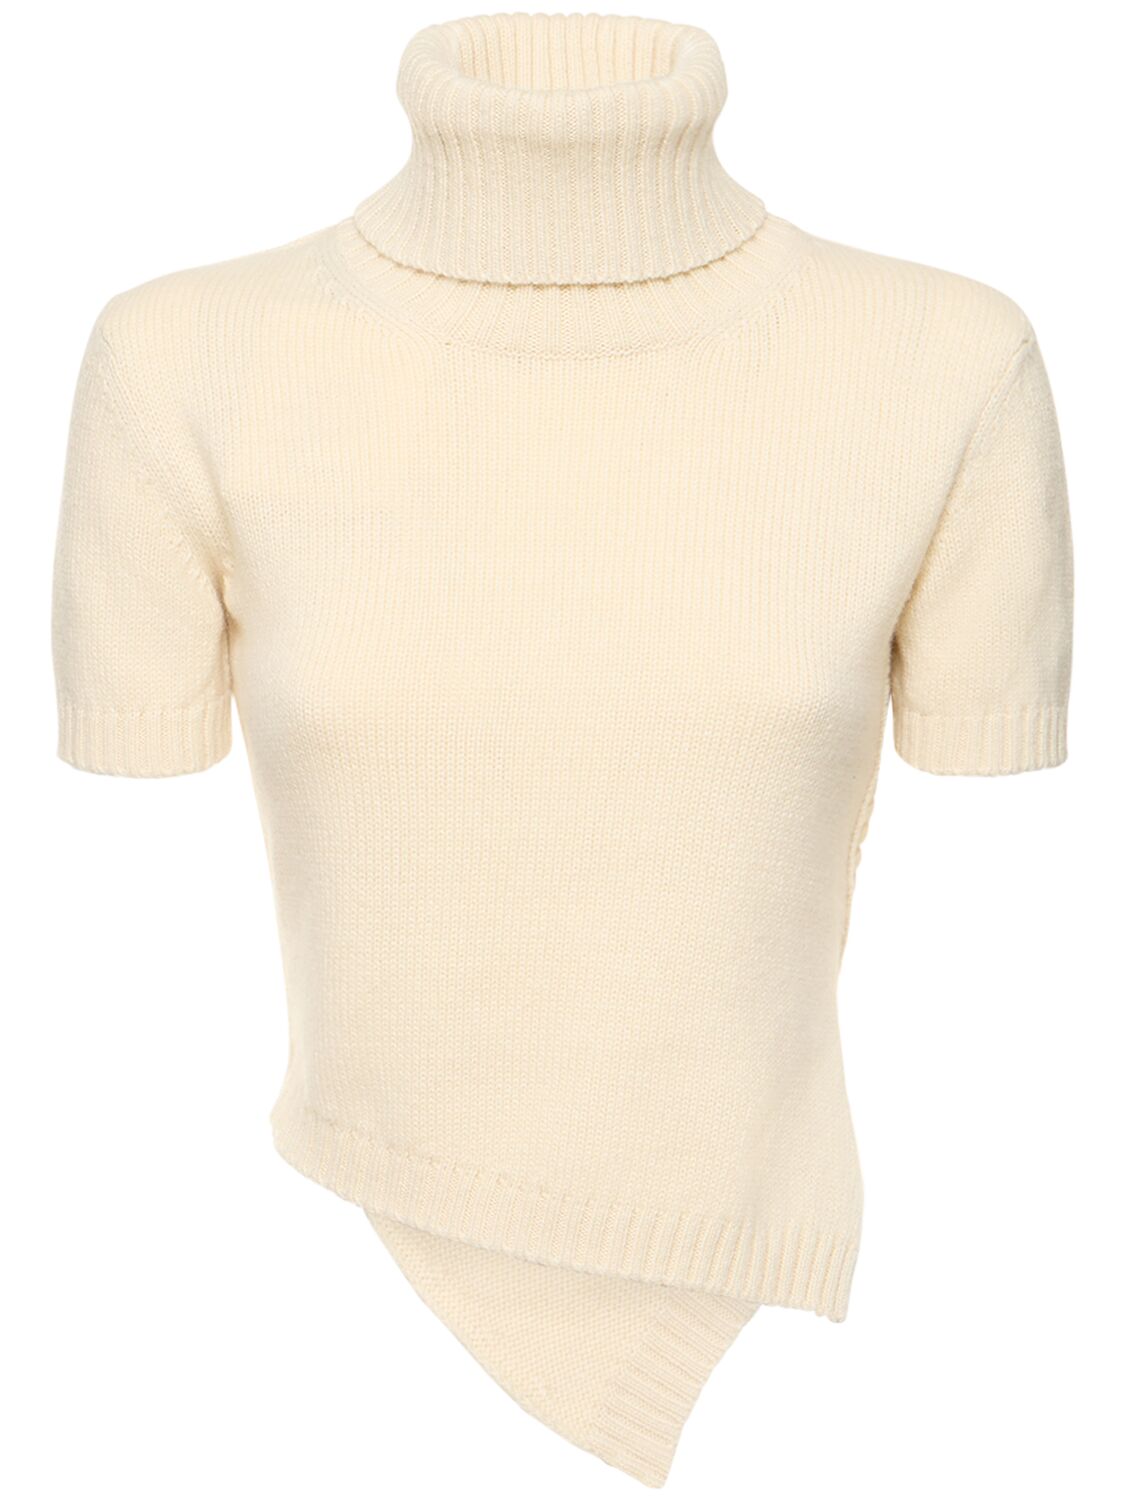 Image of Dria Asymmetric Cashmere Blend Knit Top